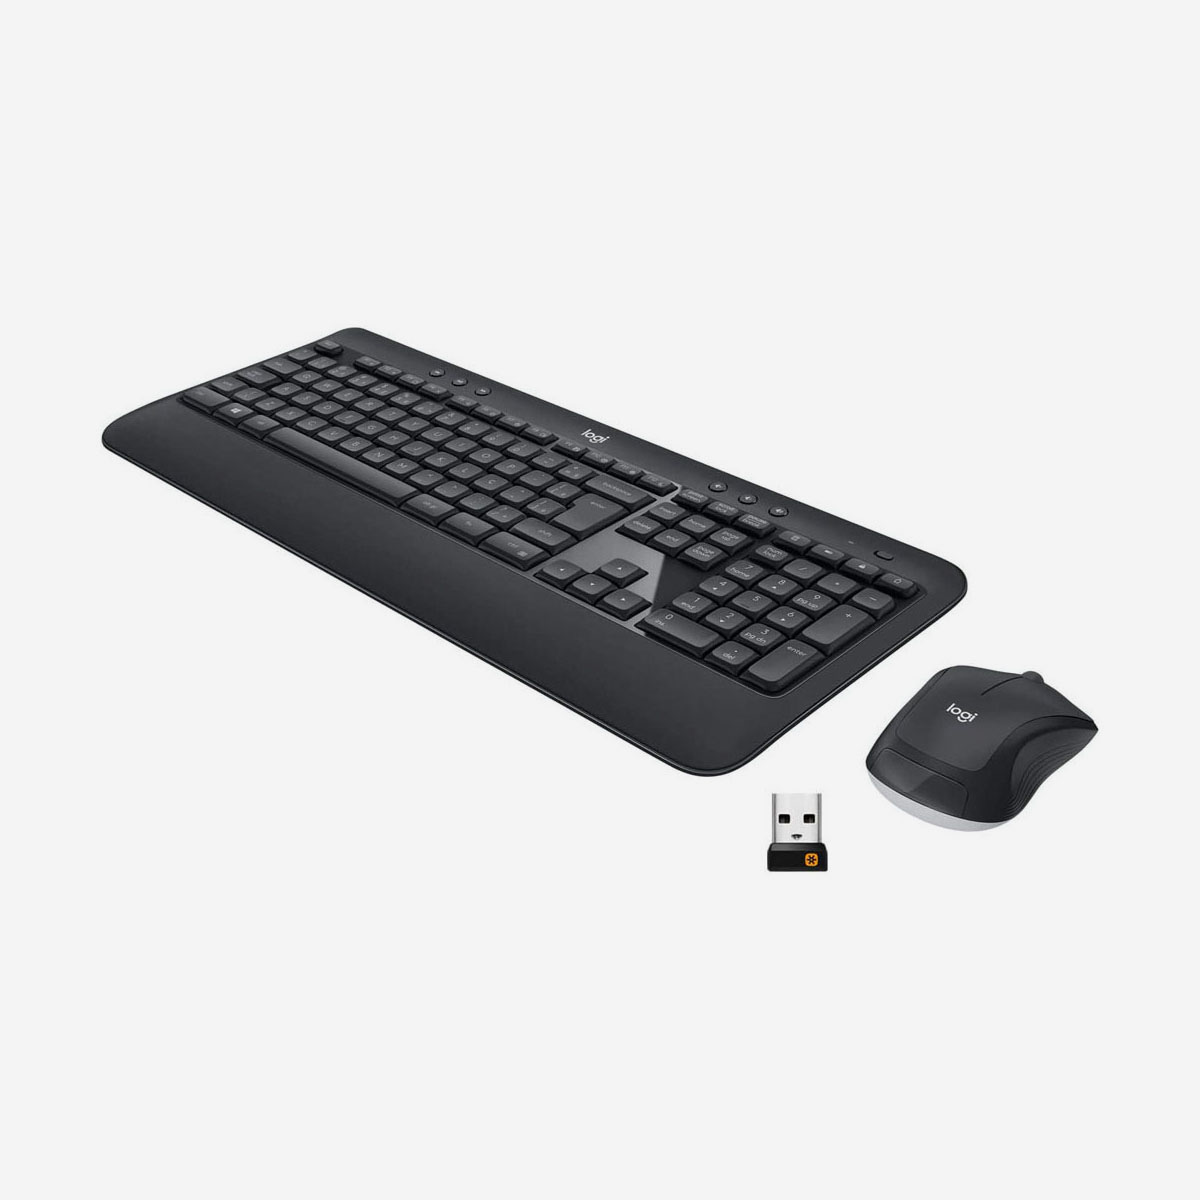 shop43-keyboard-mouse (2)